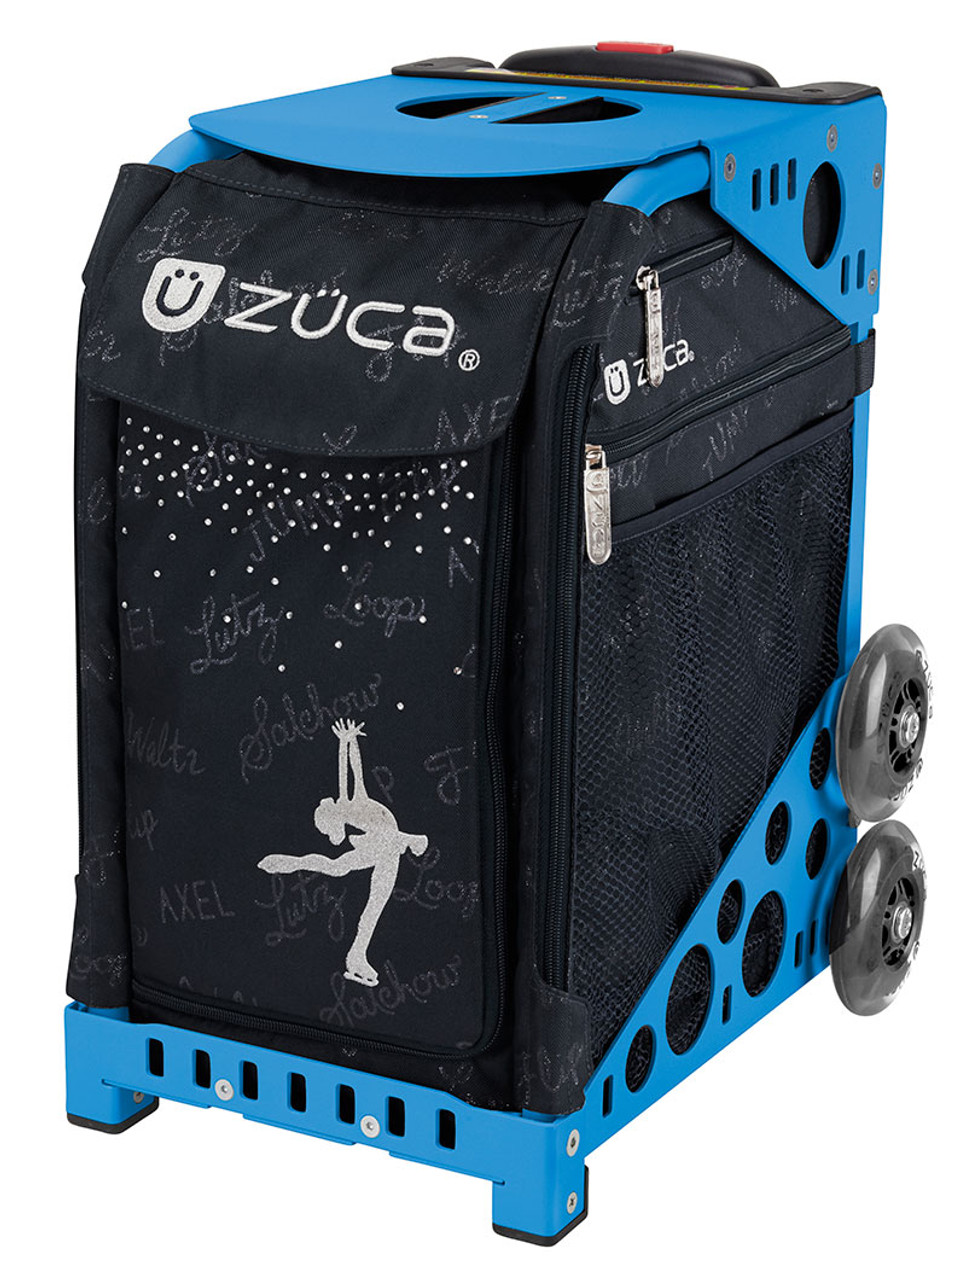 Zuca Sport Bag - ?nicorn 2